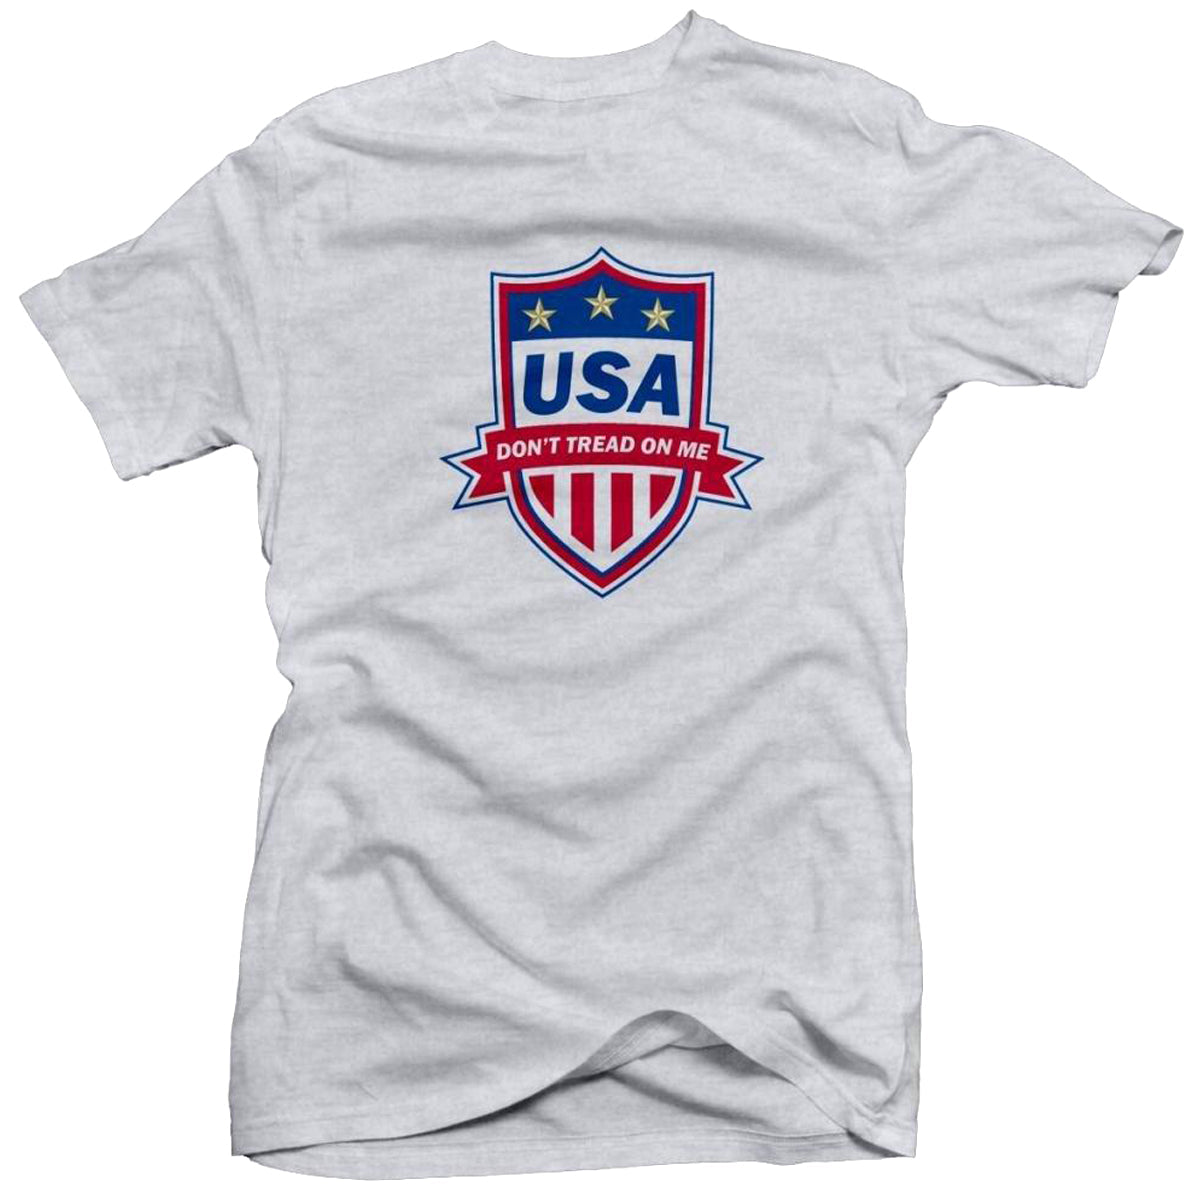 USA Don't Tread on Me Soccer Badge Printed Tee T-shirts 411 Youth Medium Ash 